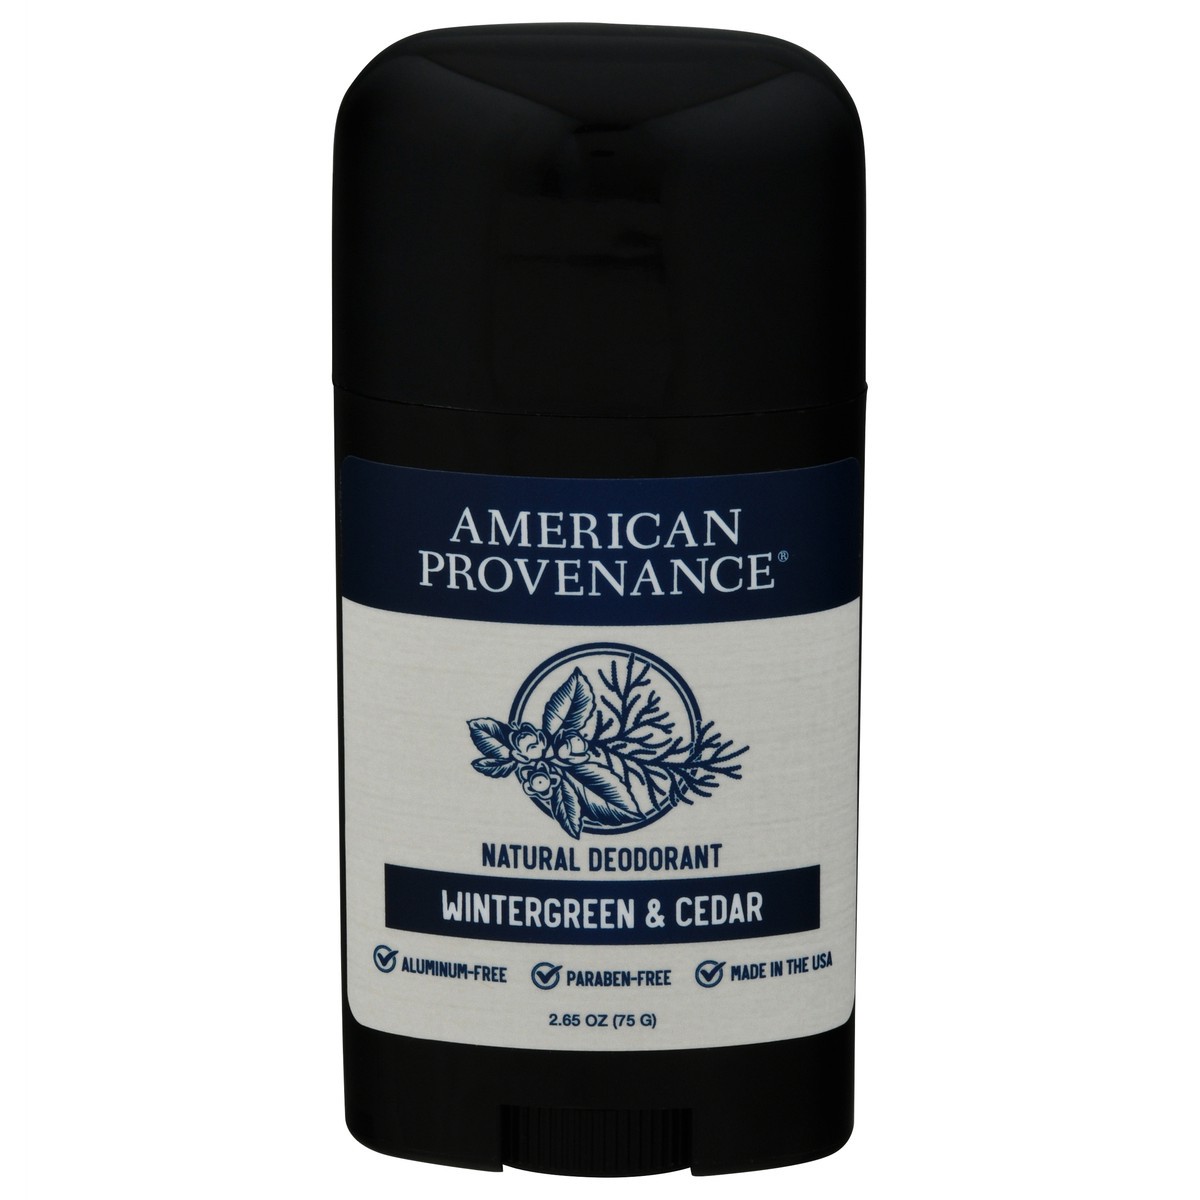 slide 1 of 13, American Provenance Wintergreen & Cedar Natural Deodorant 2.65 oz, 2.65 oz